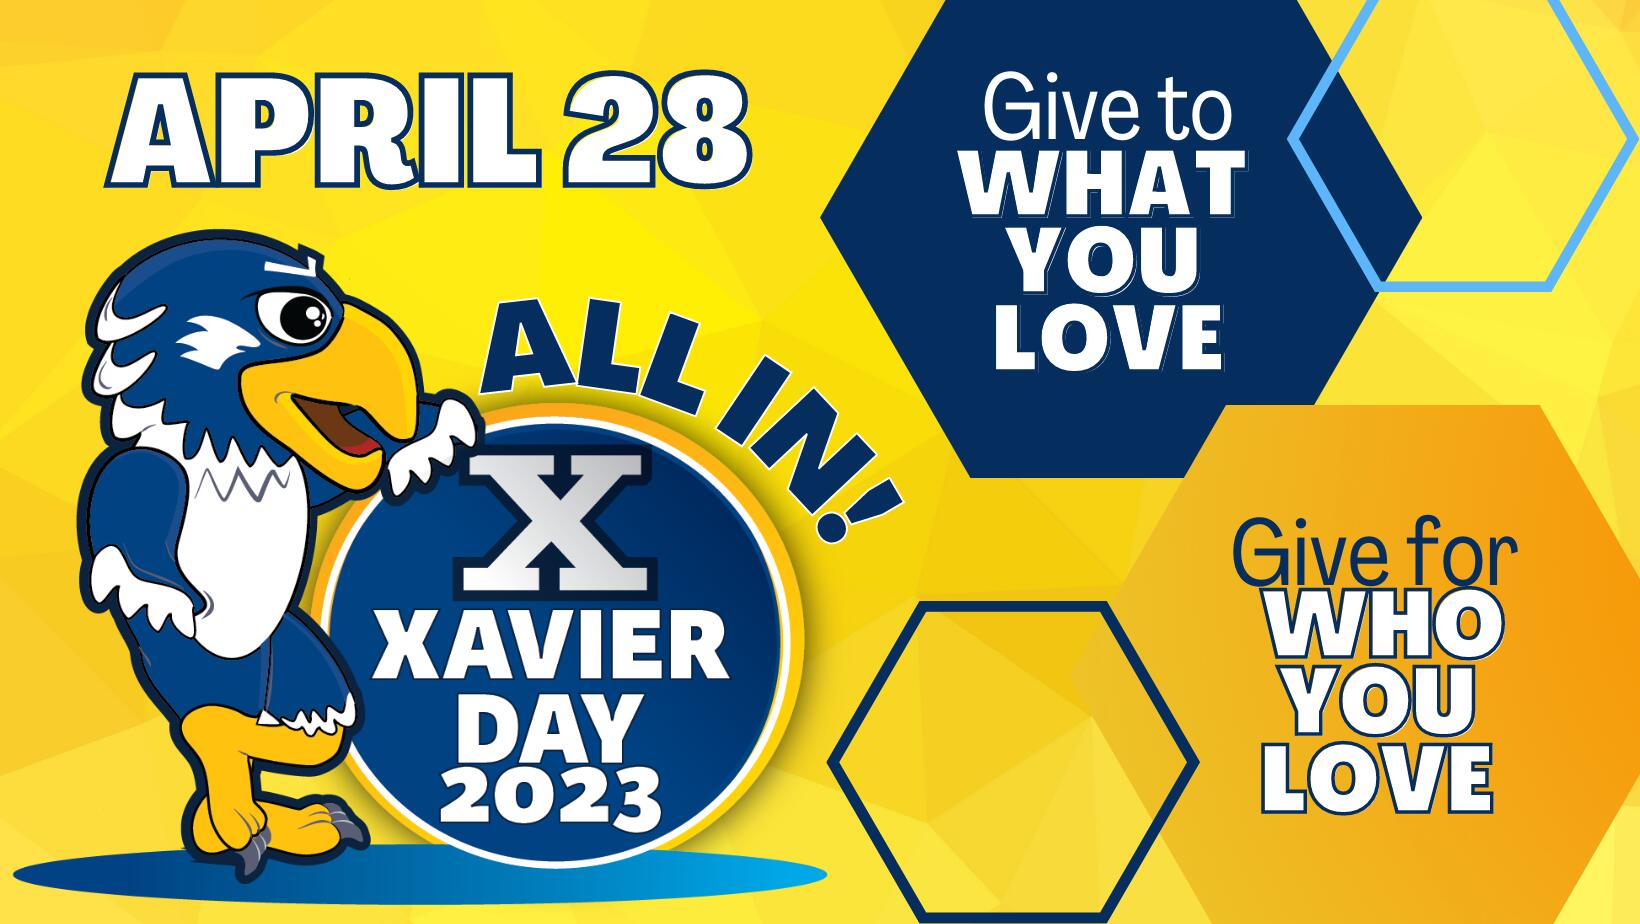 Xavier Day April 28 2023 Invitation to Join Xavier to Celebrate